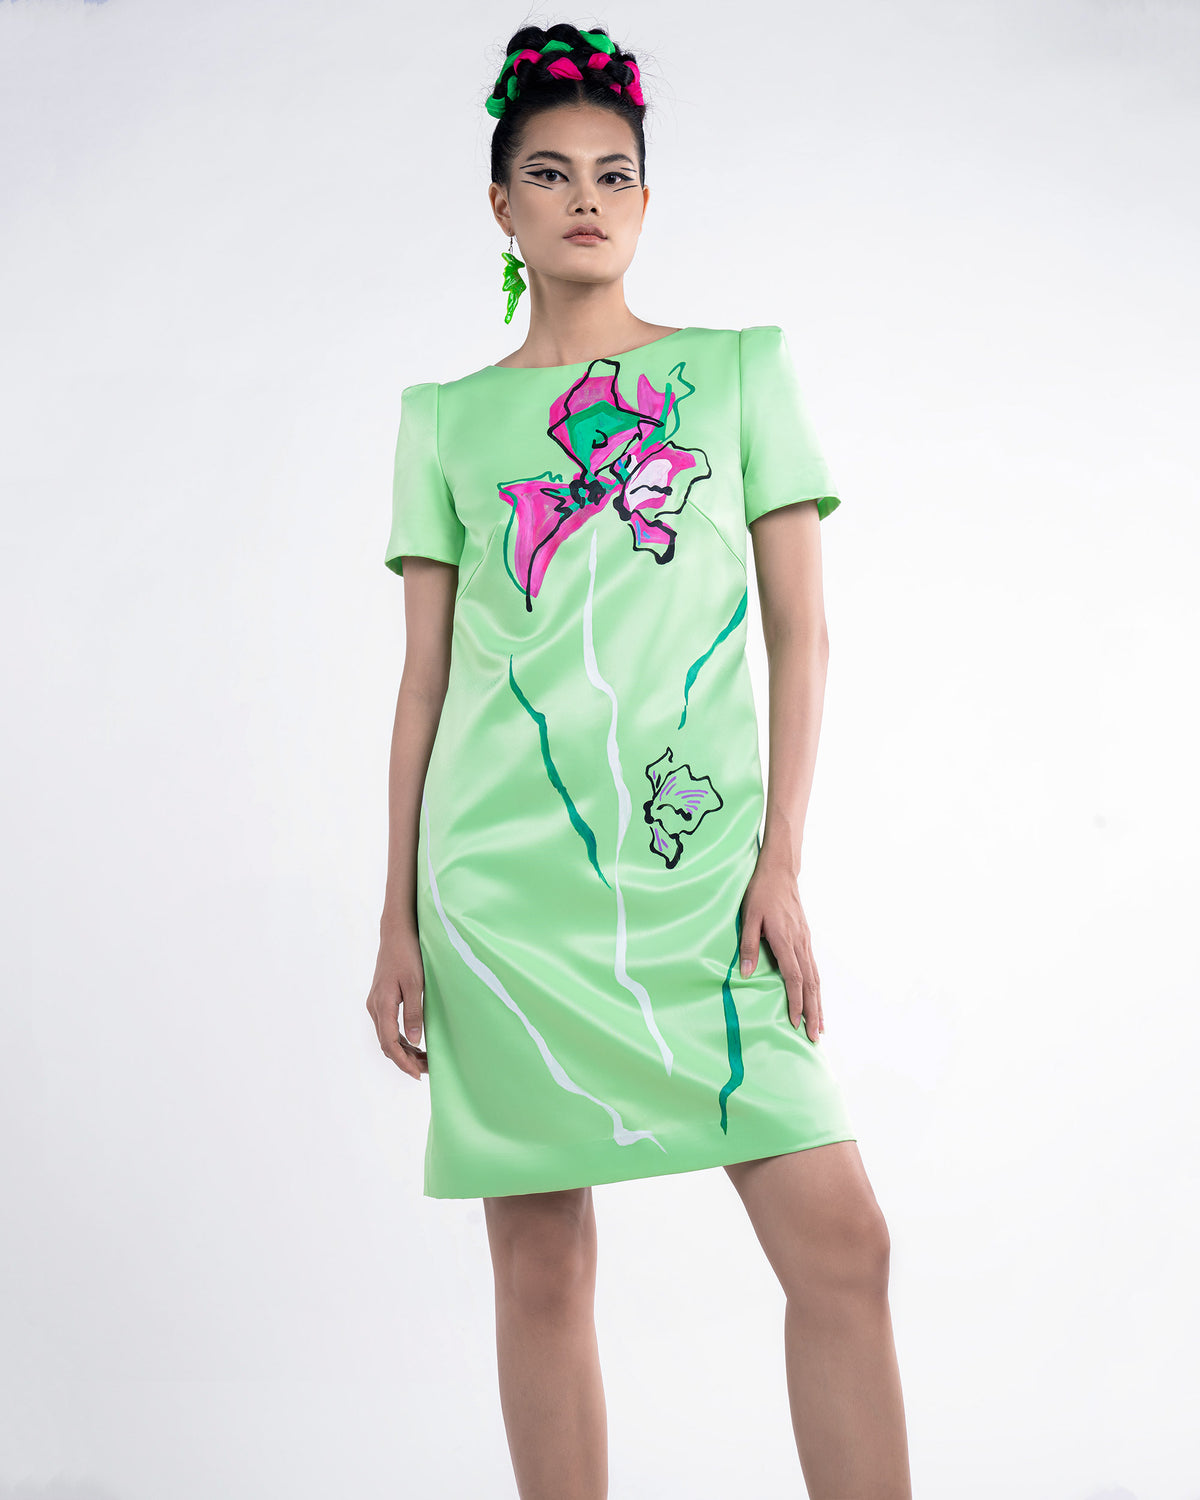 Blooming - Tucked Sleeves Mint Green Mini Dress